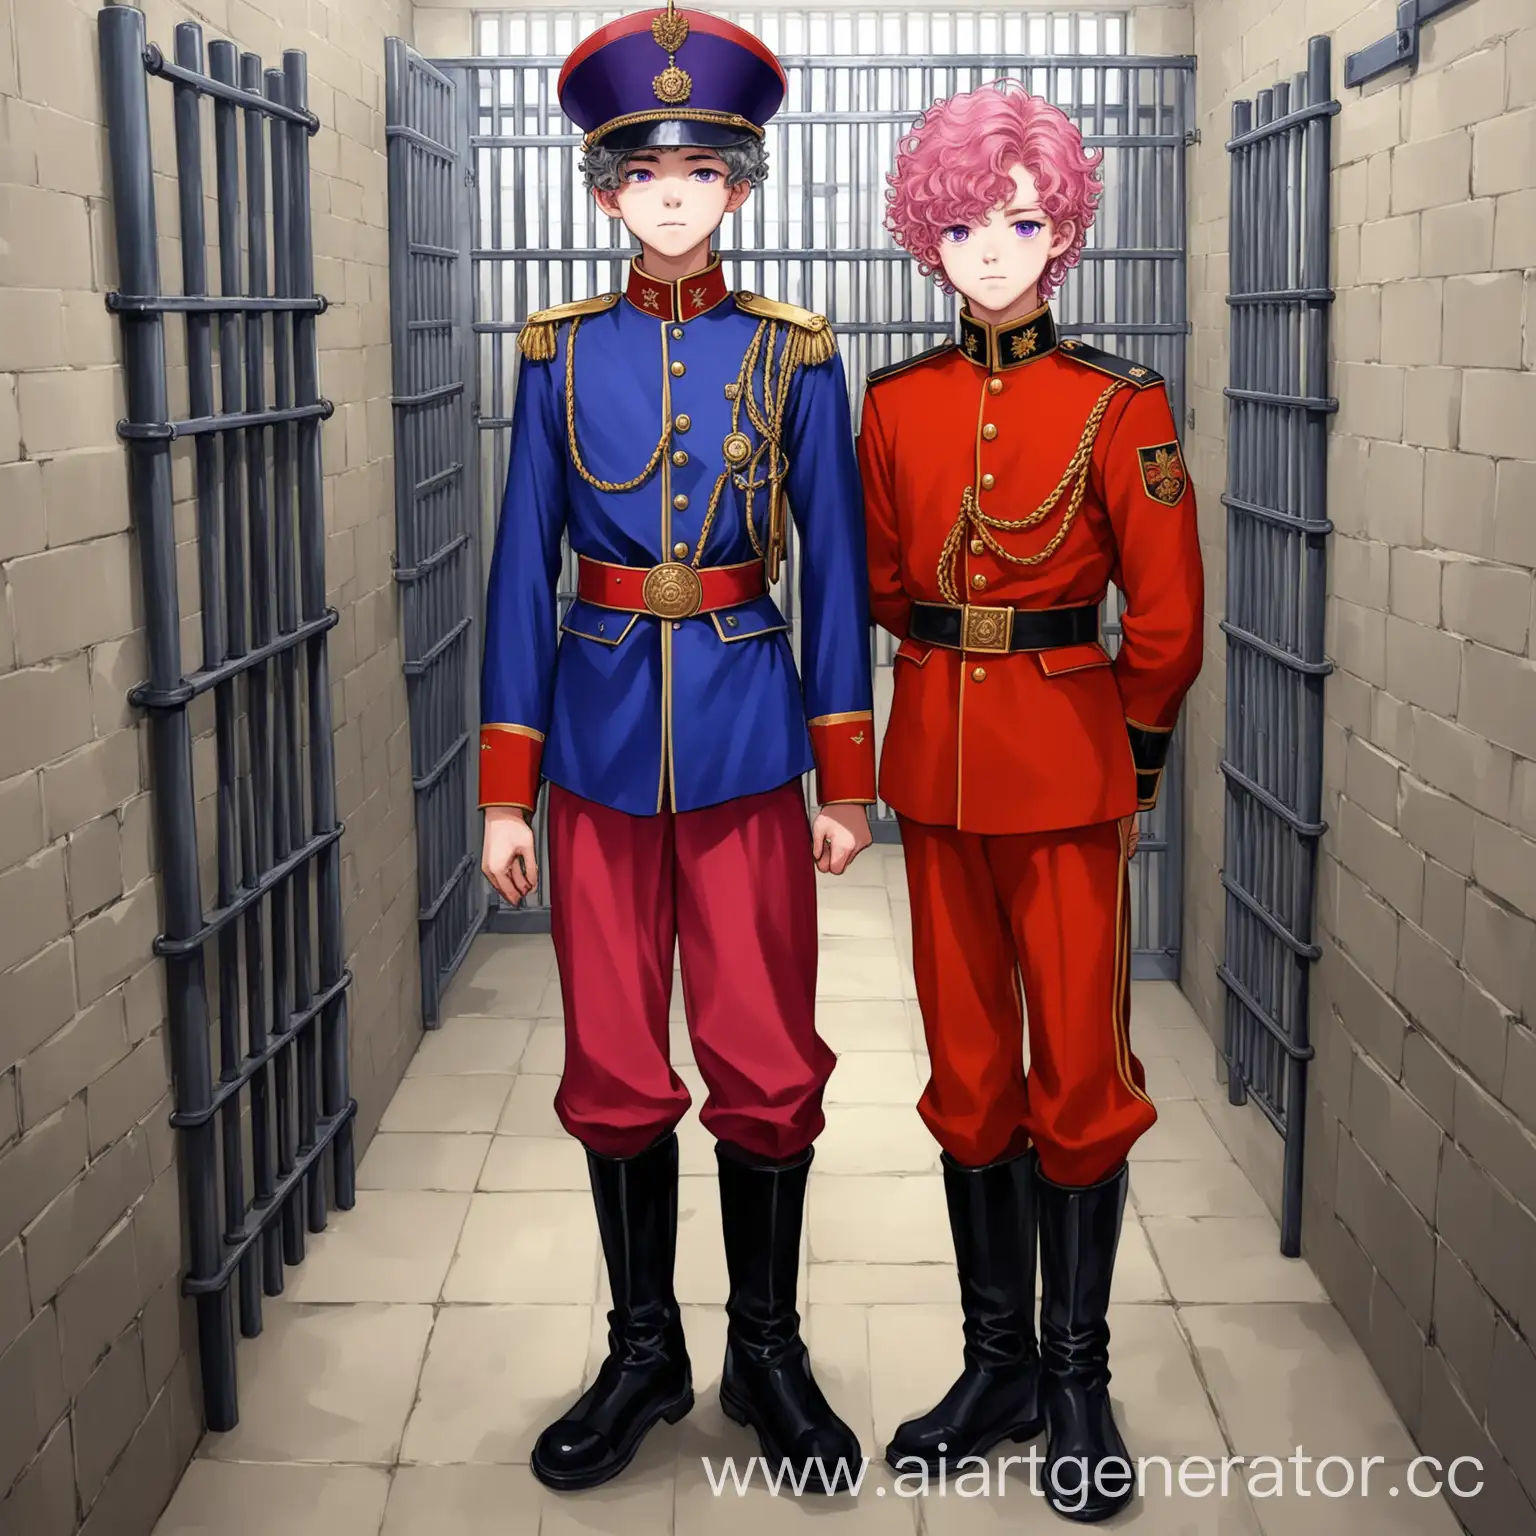 Teenage-Demon-Guard-in-Royal-Uniform-Against-Prison-Backdrop